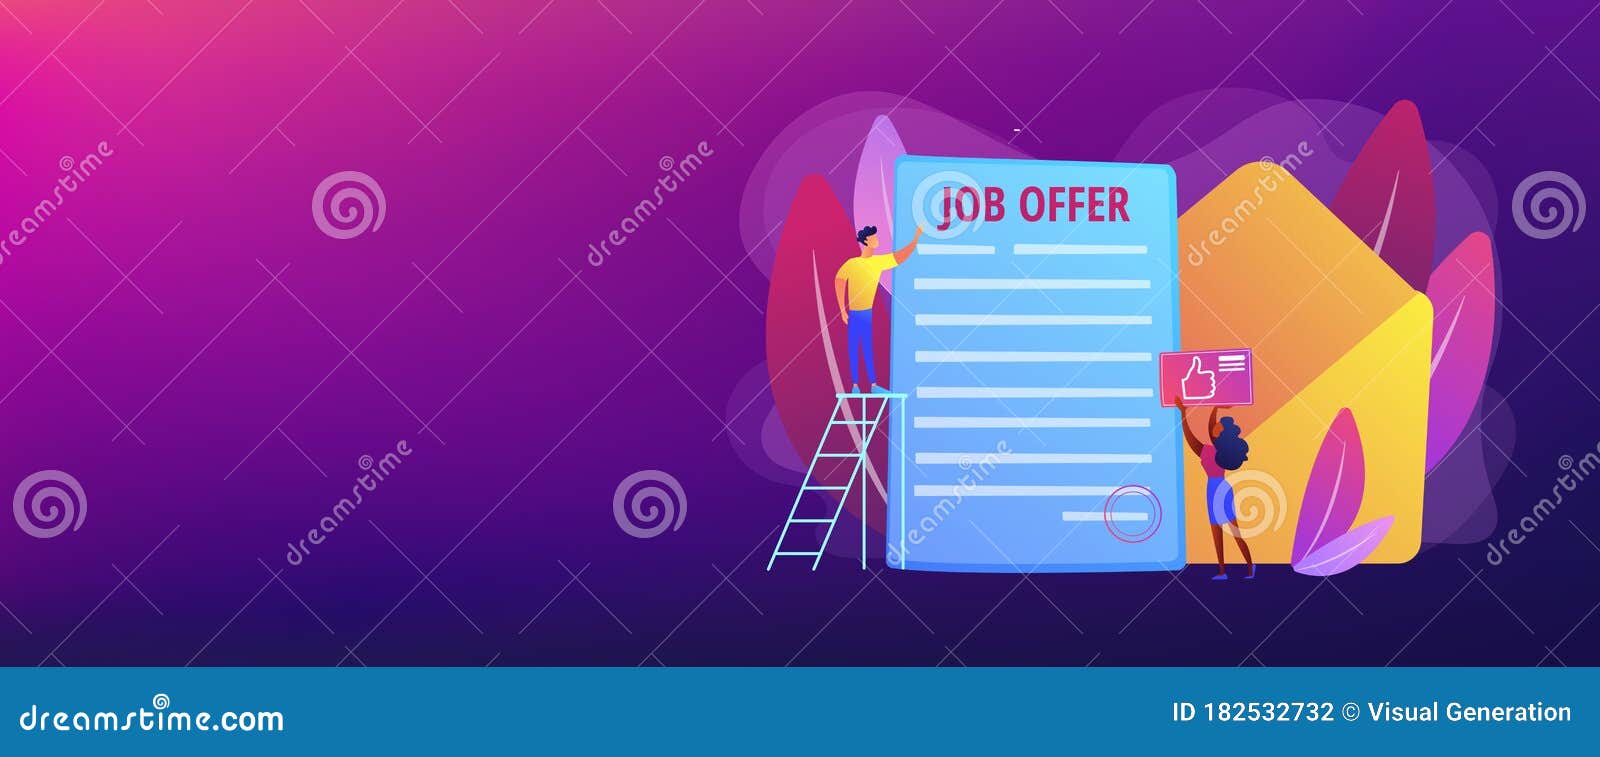 Job Offer Concept Banner  Header  Stock Vector Illustration of offer 